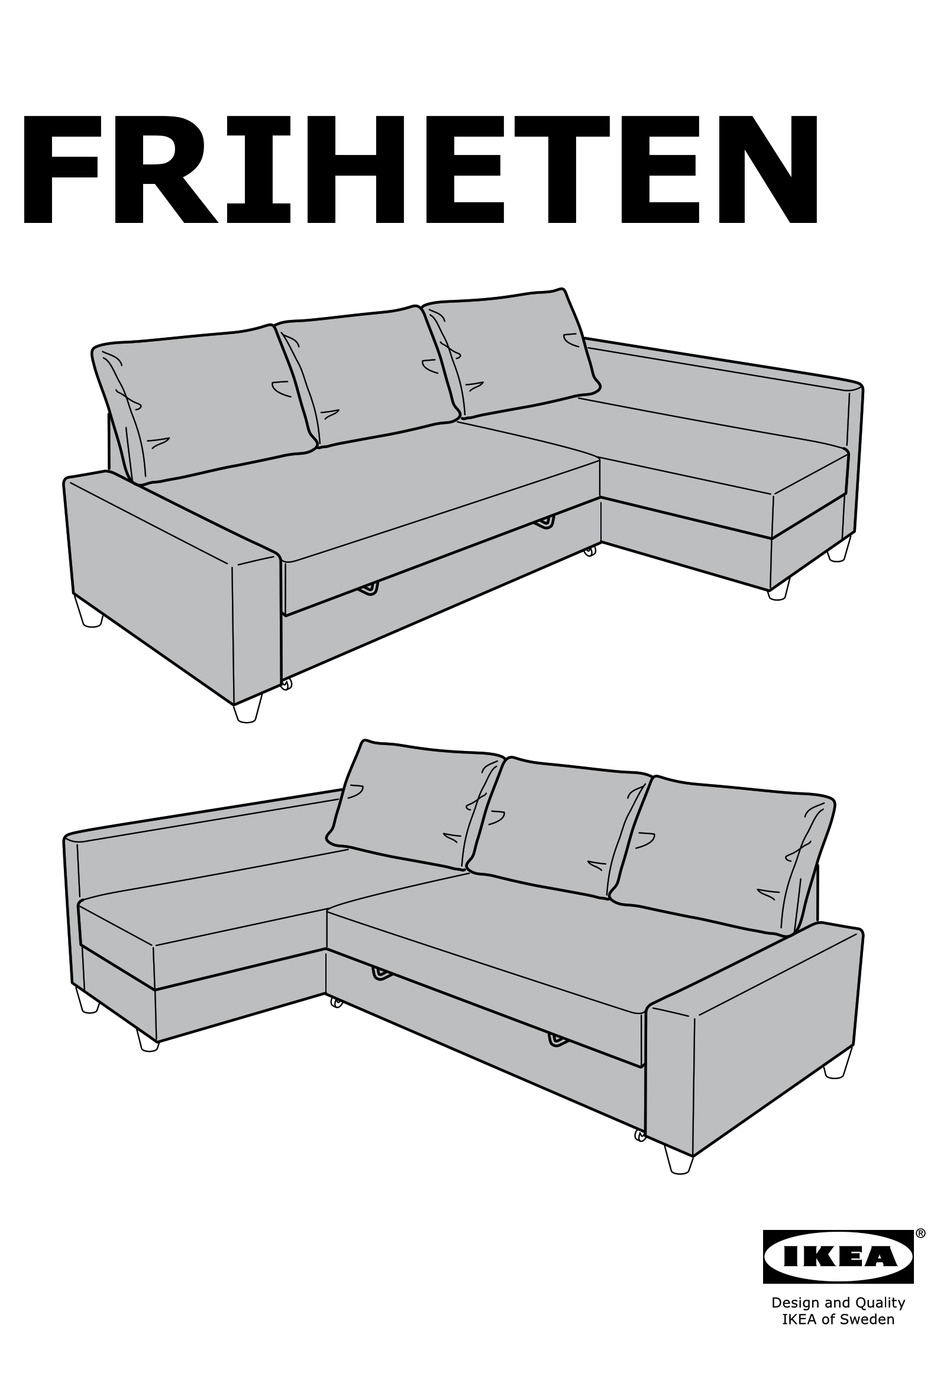 Ikea Friheten Assembly Instructions, Friheten Sleeper Sofa Assembly Instructions